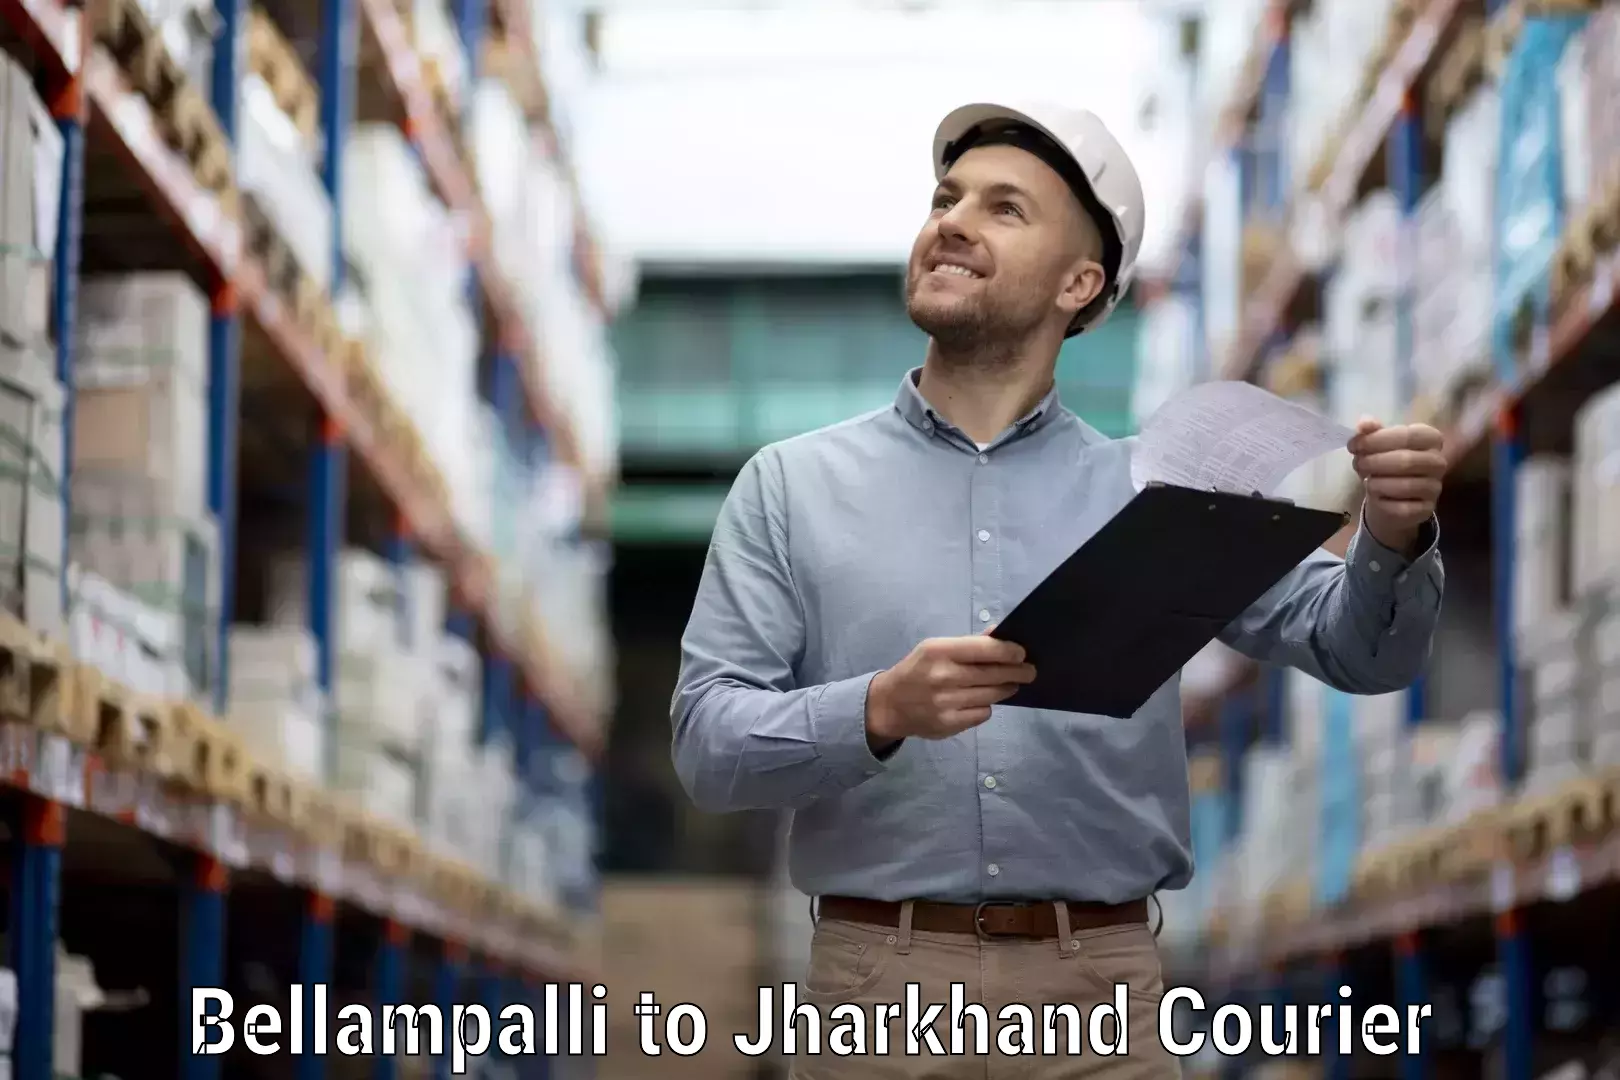 International courier networks Bellampalli to Dhanbad